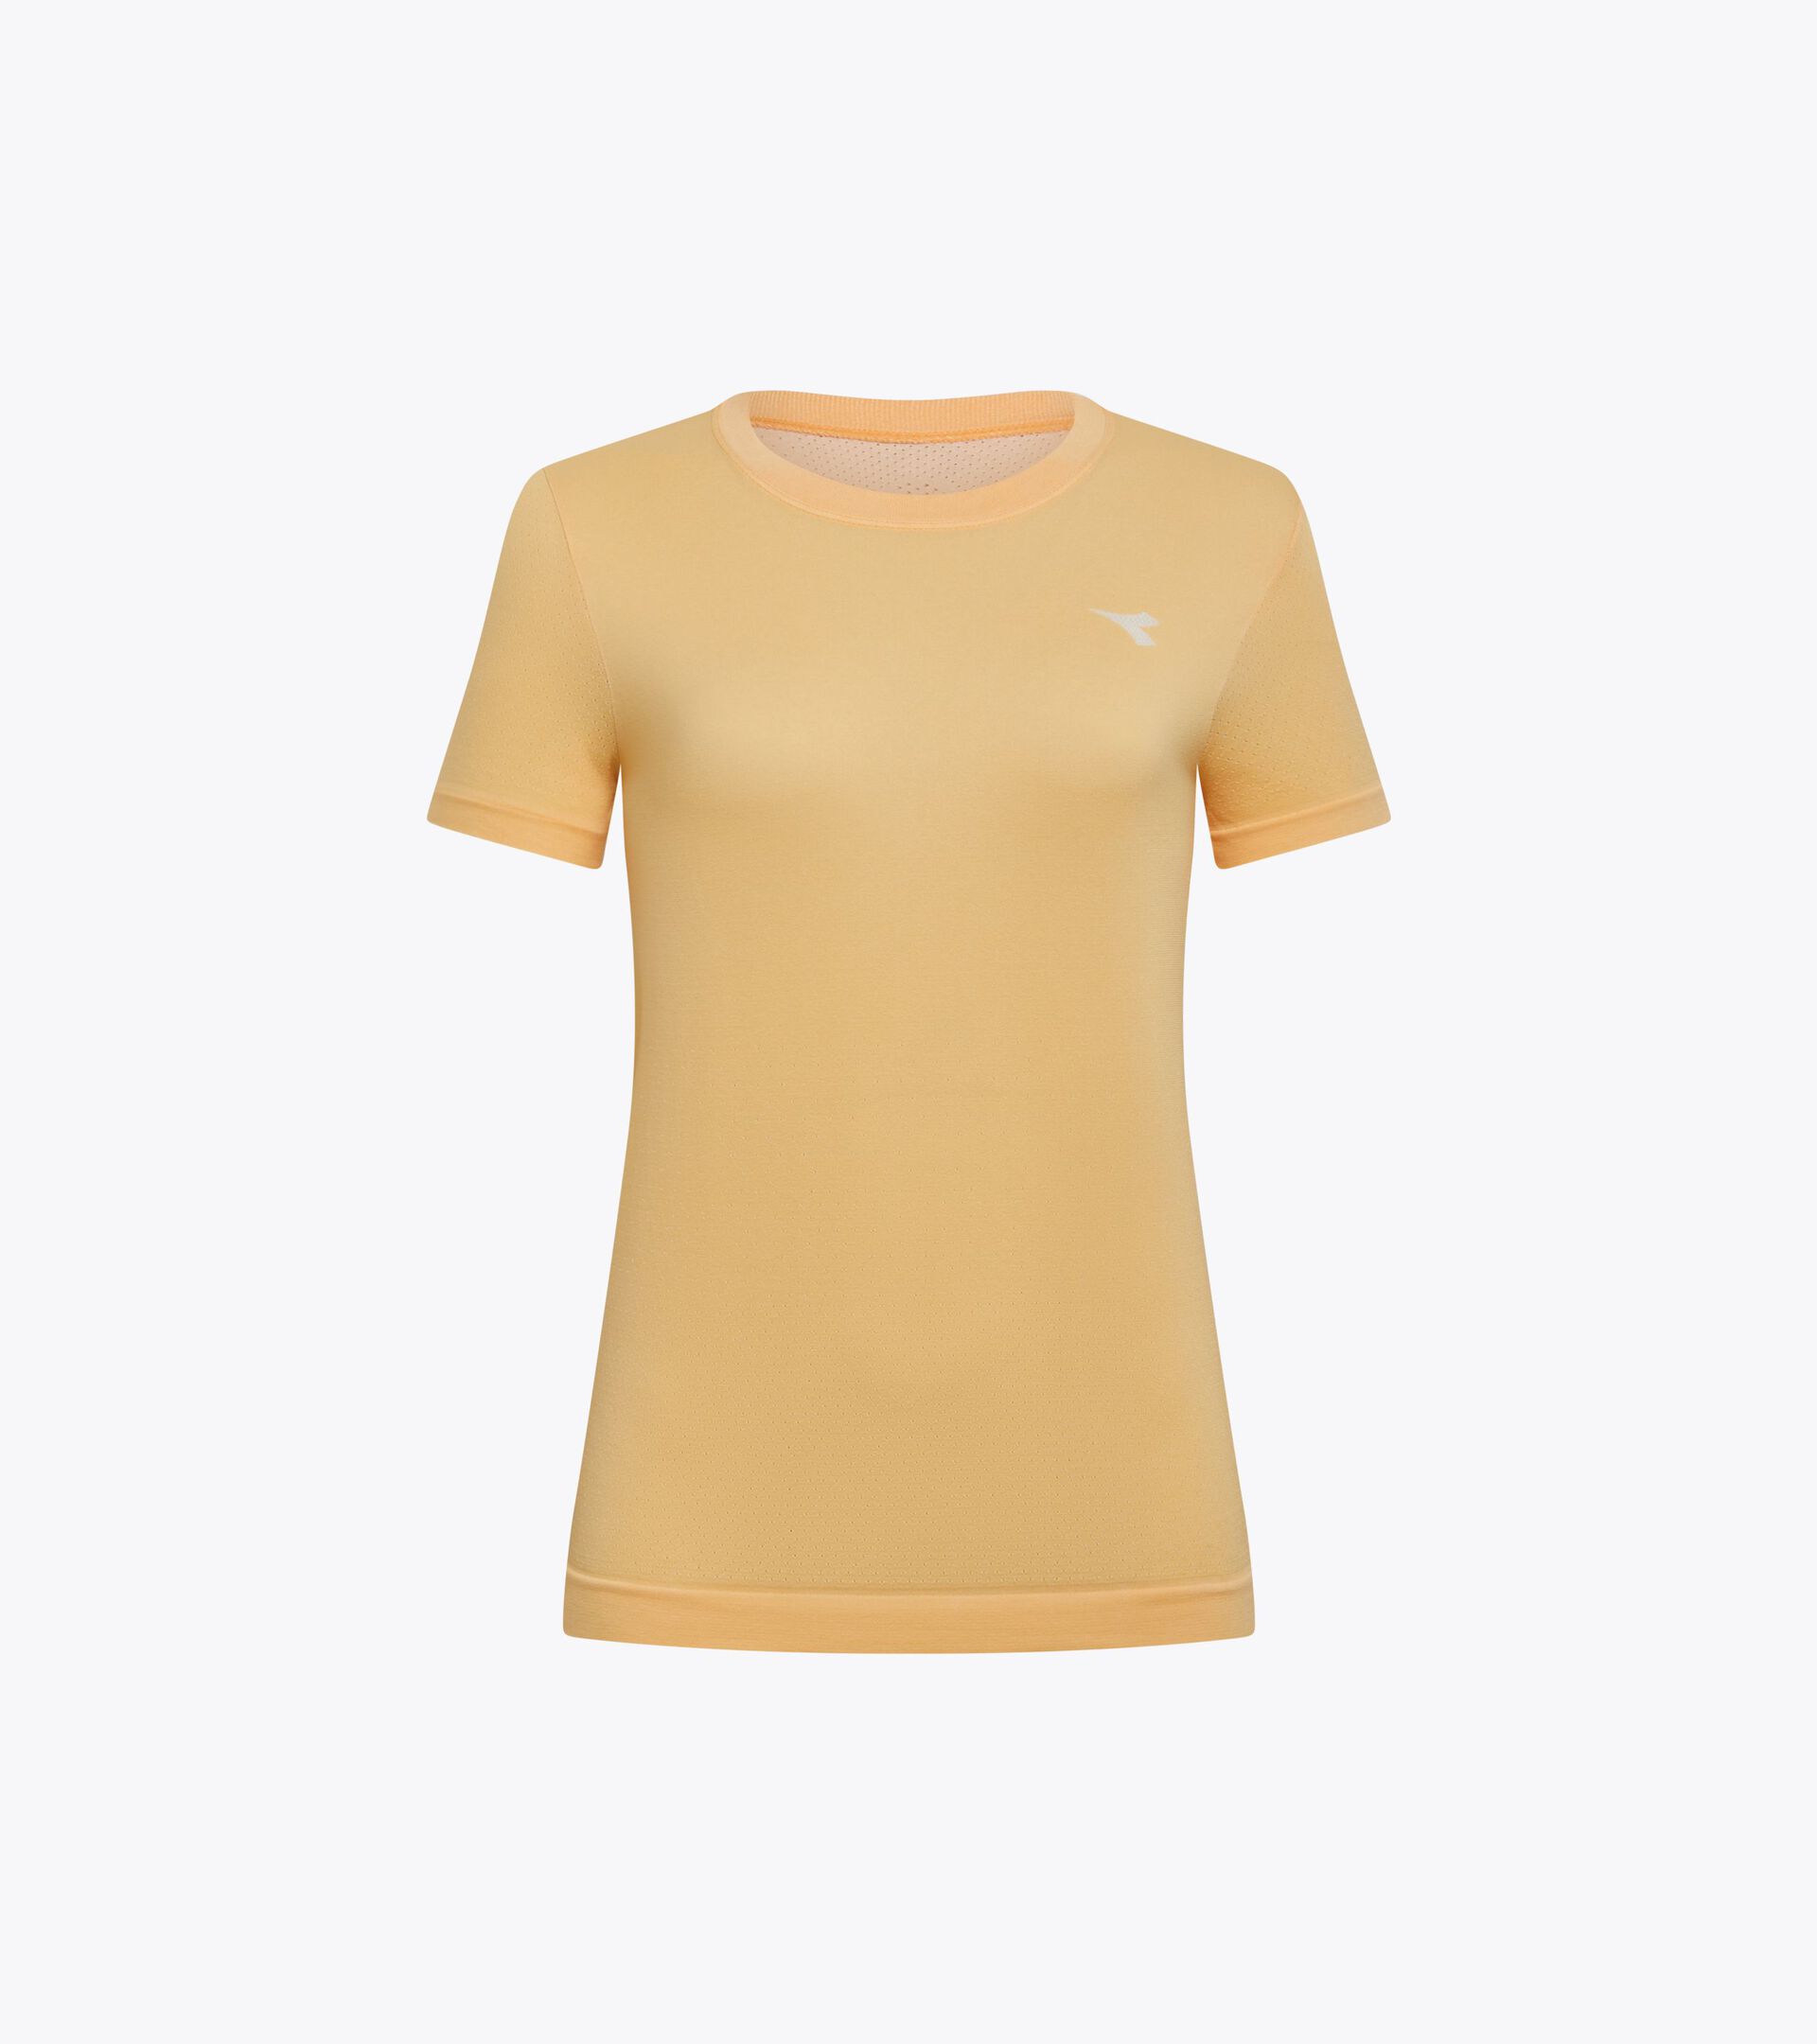 Seamless running t-shirt - Made in Italy - Women’s L. SS T-SHIRT SKIN FRIENDLY PALE MARIGOLD - Diadora